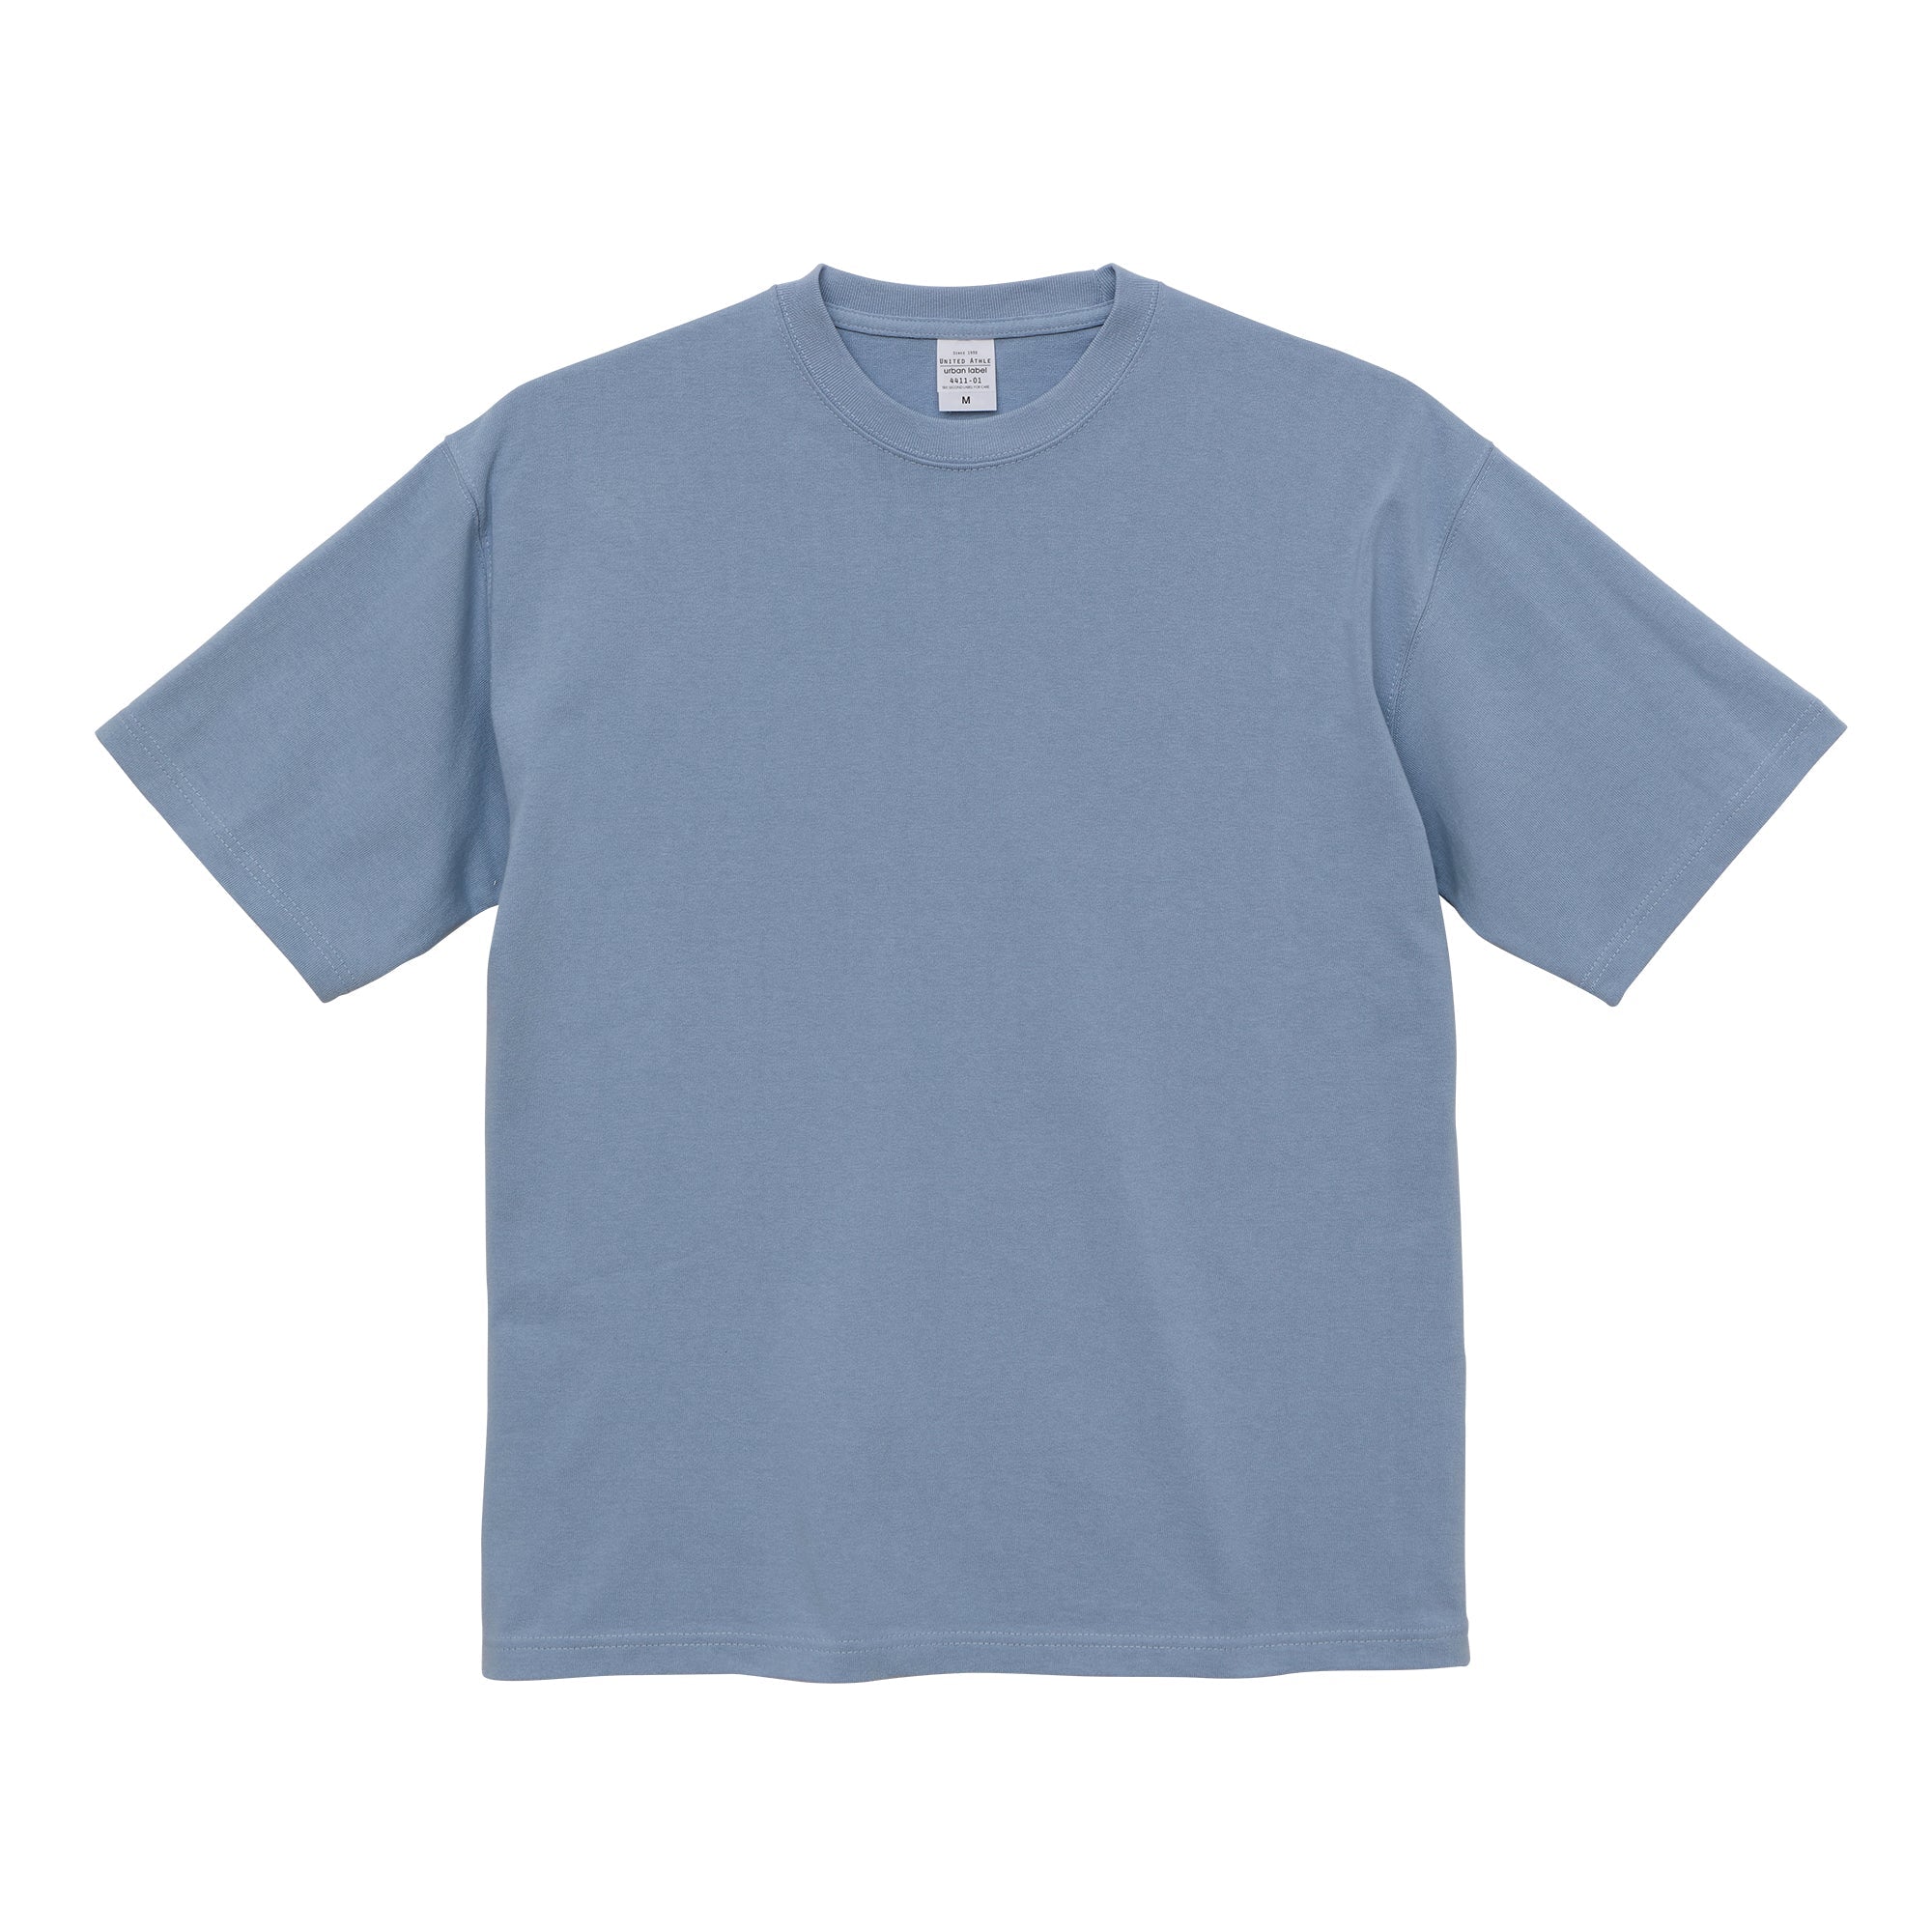 4411 - 9.1oz Magnum Weight Big Silhouette T-shirt - Acid Blue x 1